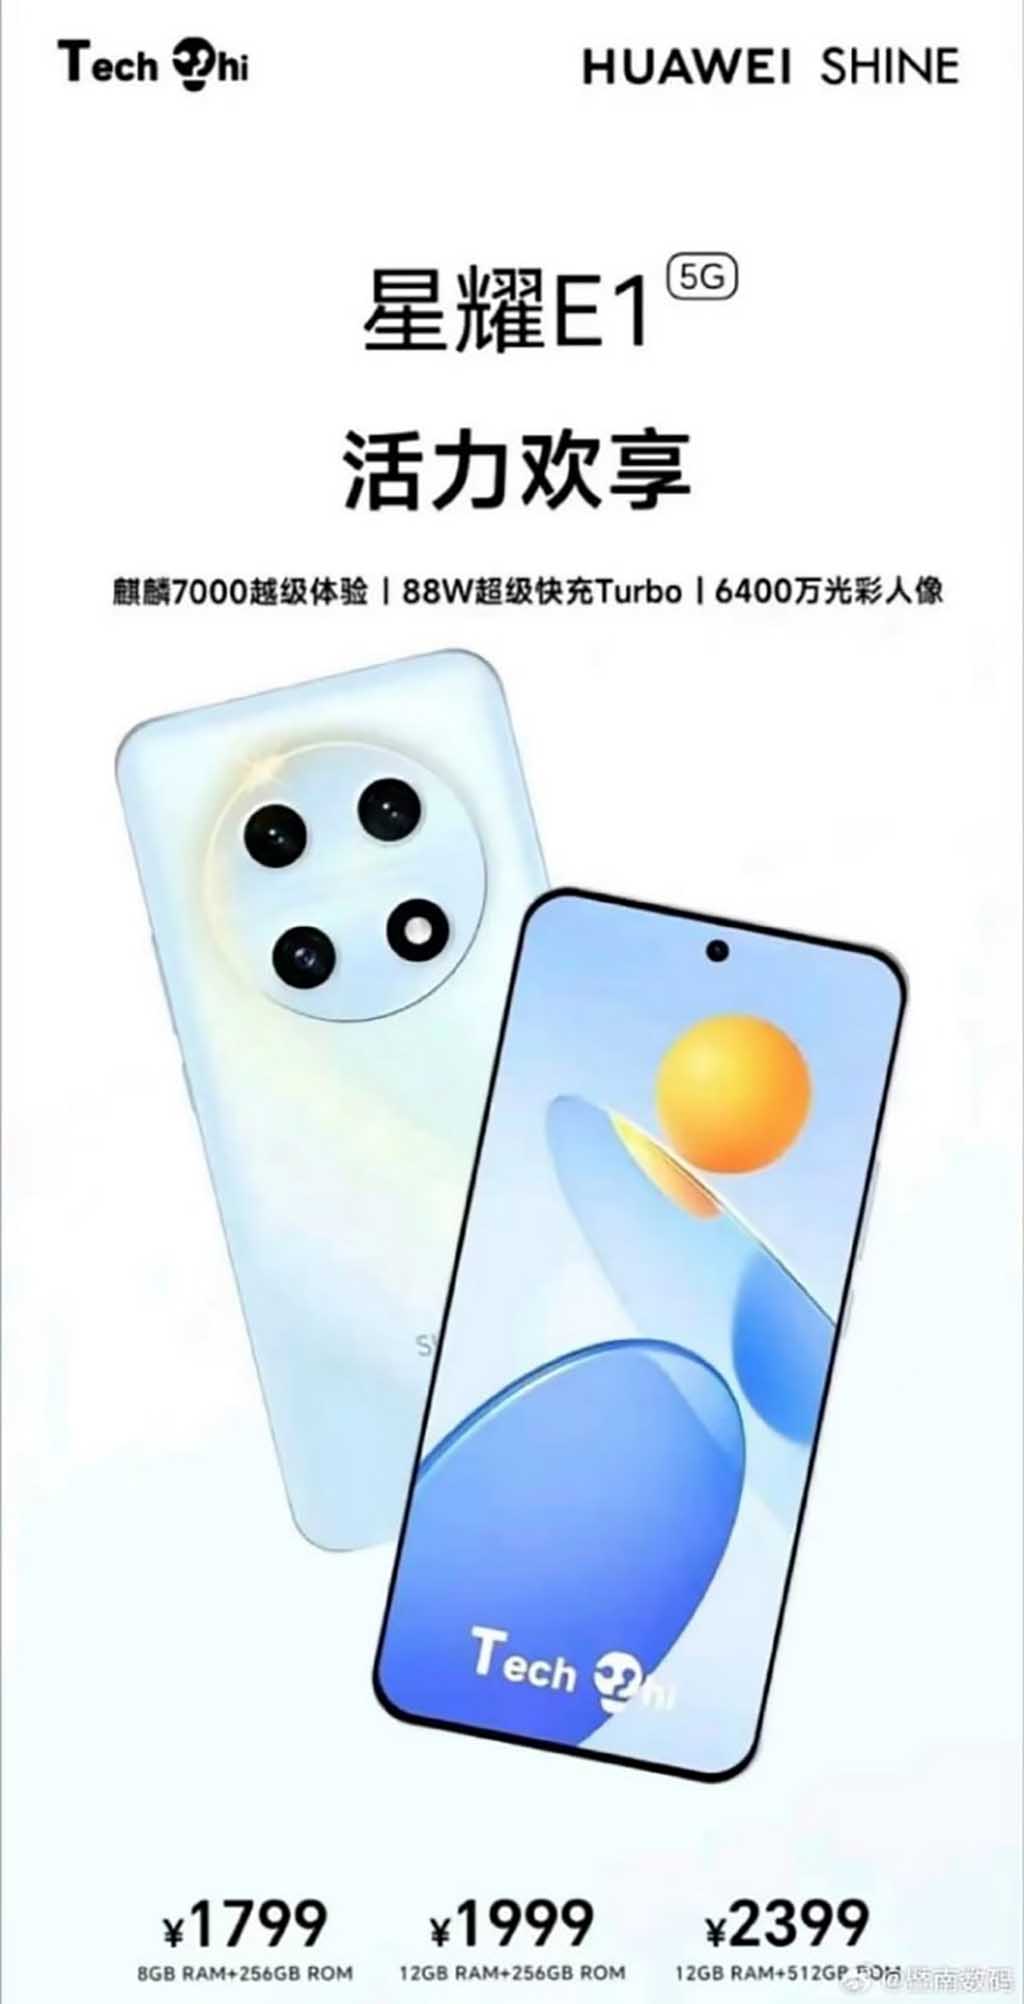 Huawei Shine phone Kirin 7000 chipset